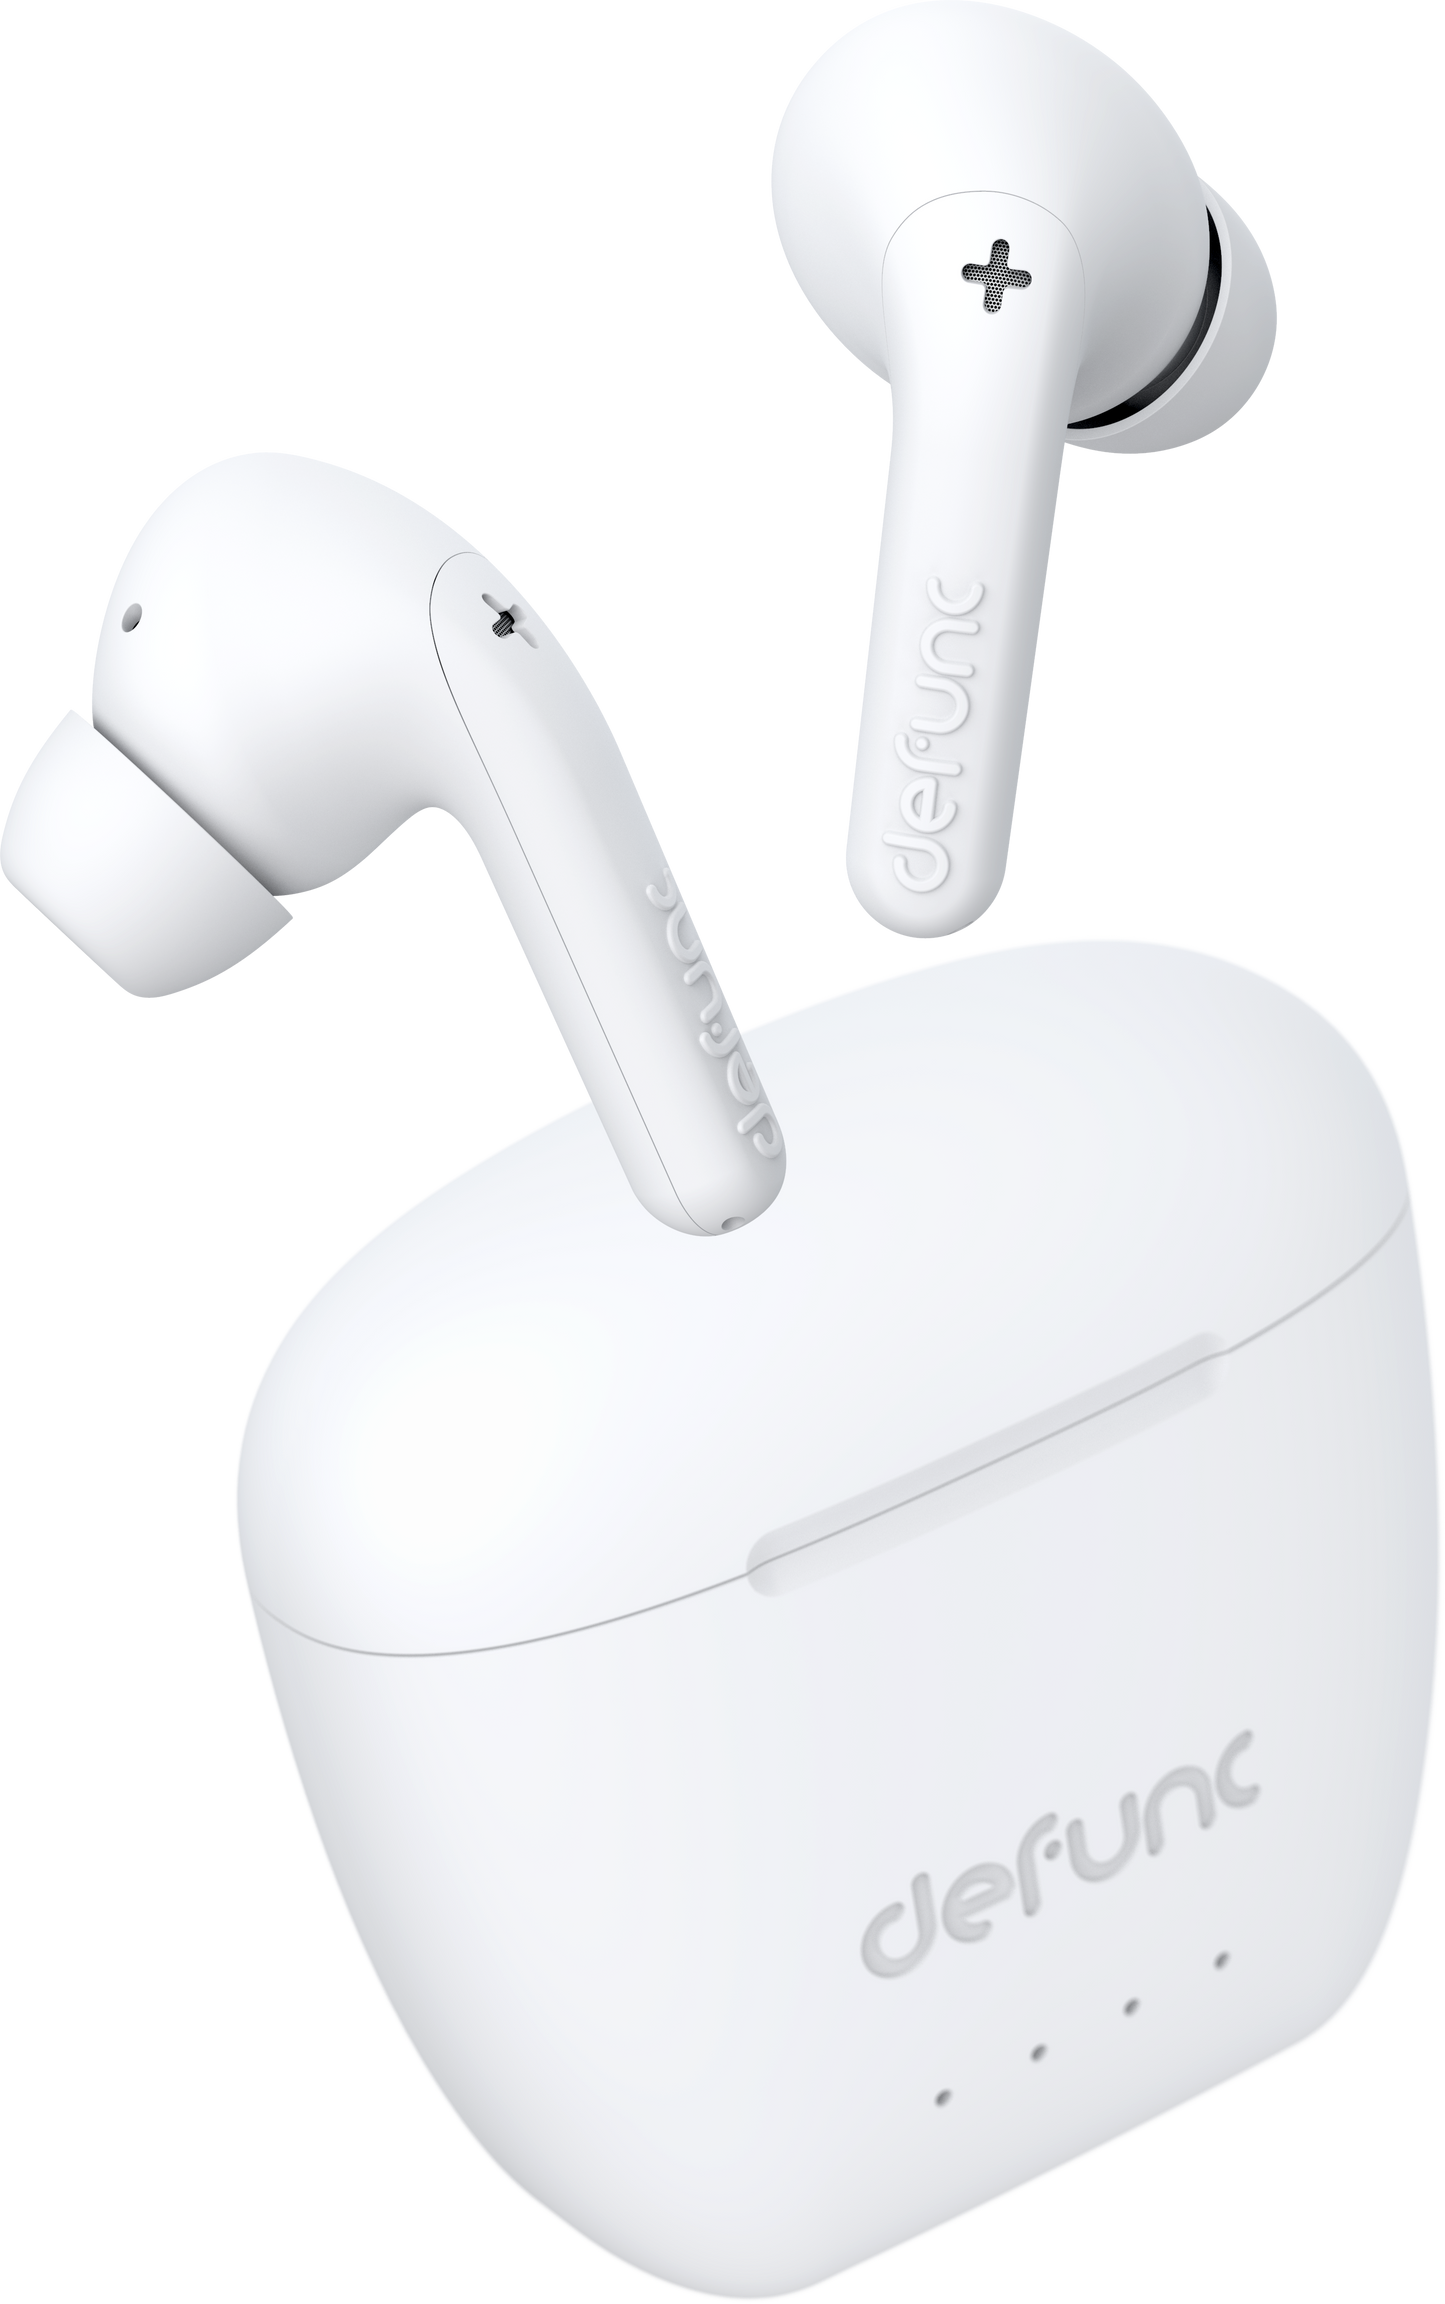 Defunc True Audio Wireless Bluetooth TWS